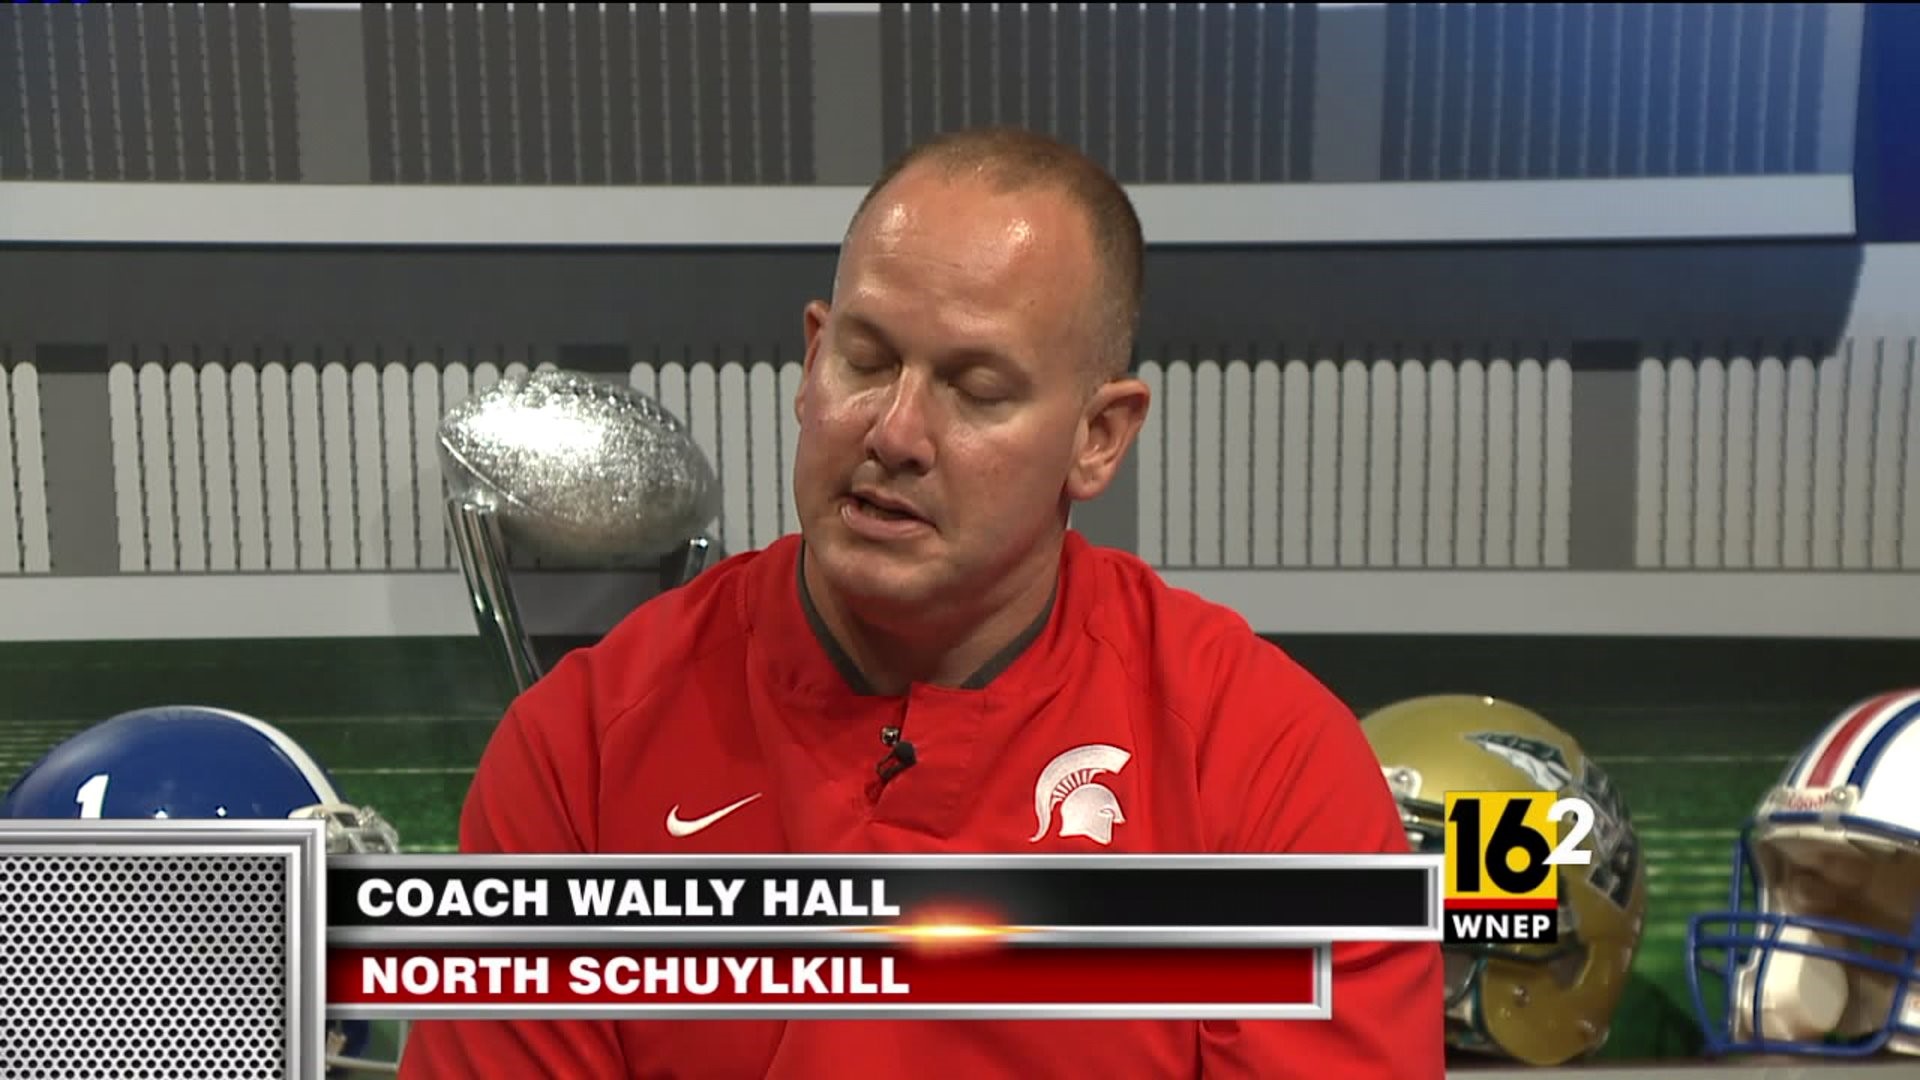 North Schuylkill Head Coach Wally Hall